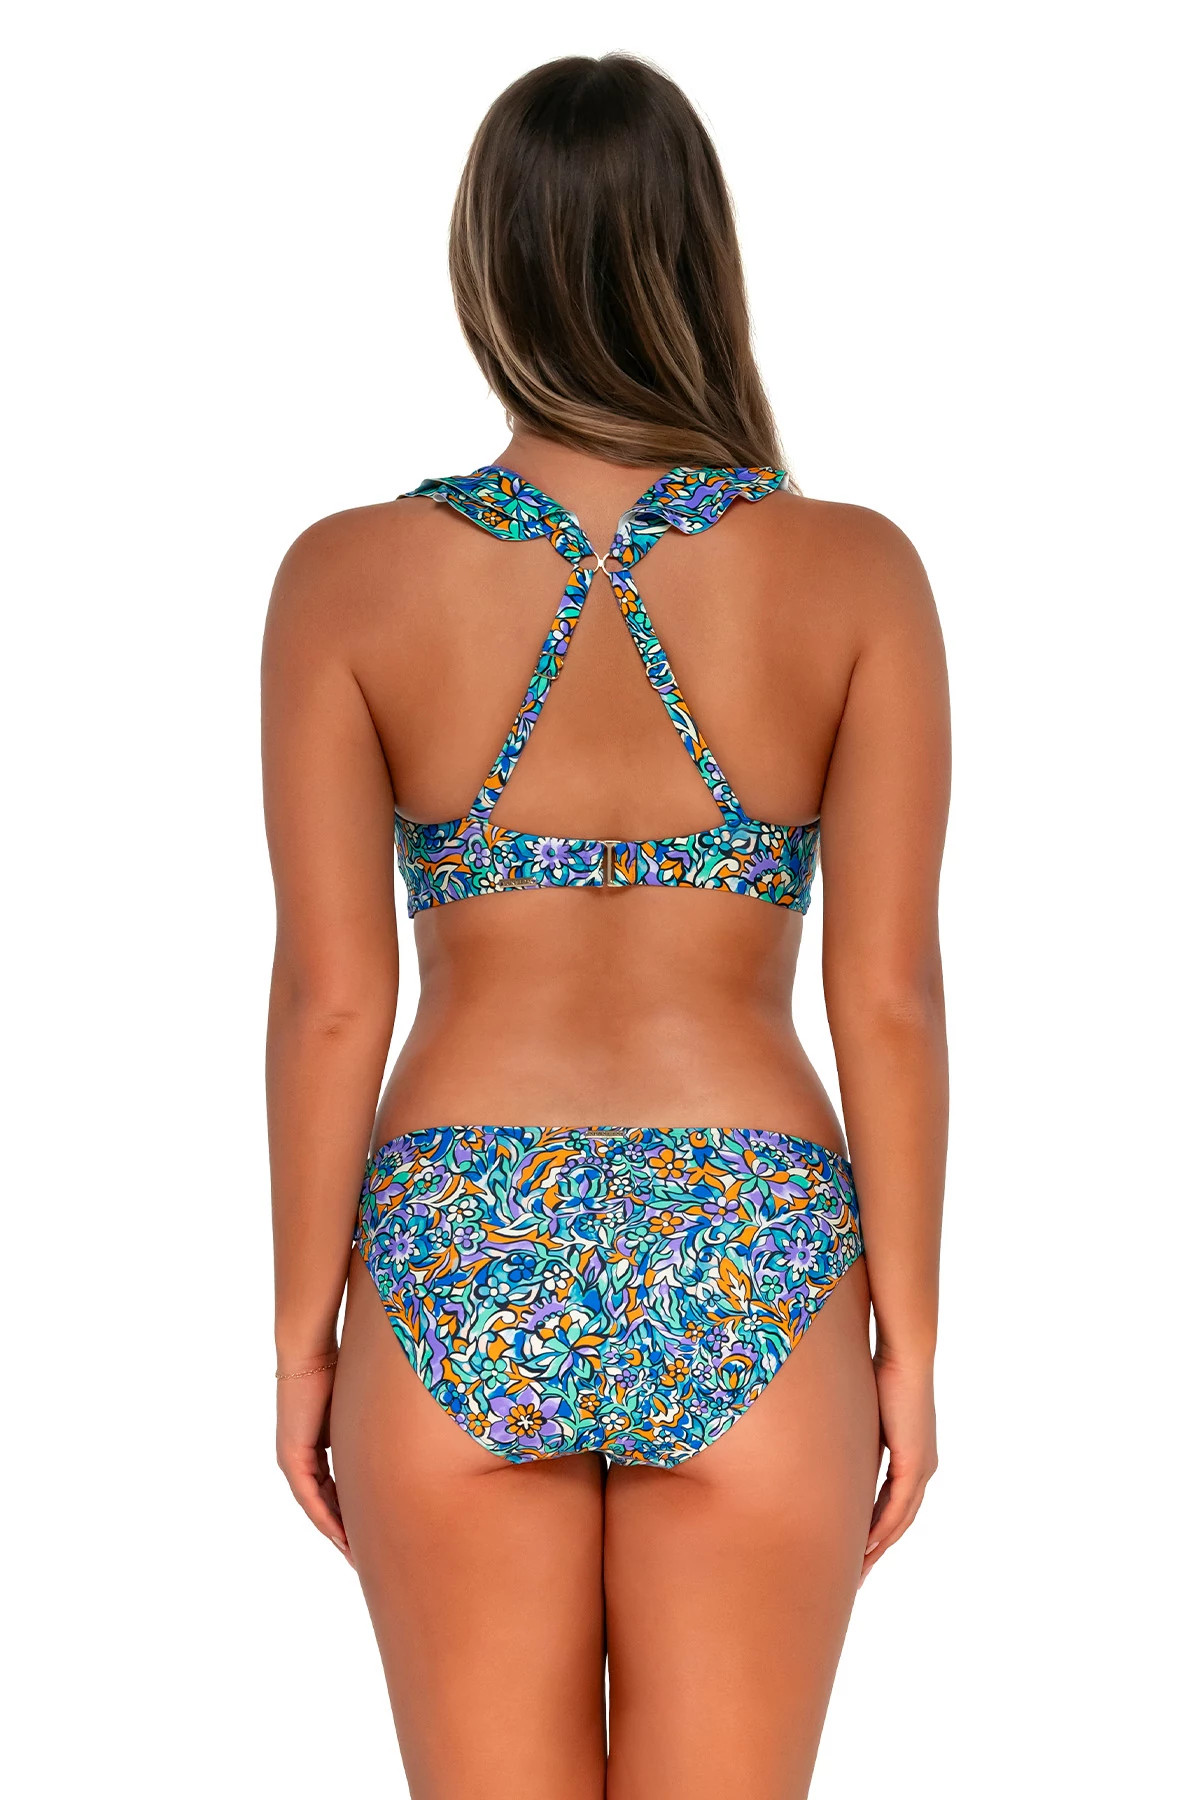 PANSY FIELDS Willa Wireless Bralette Bikini Top (E-H Cup) image number 3